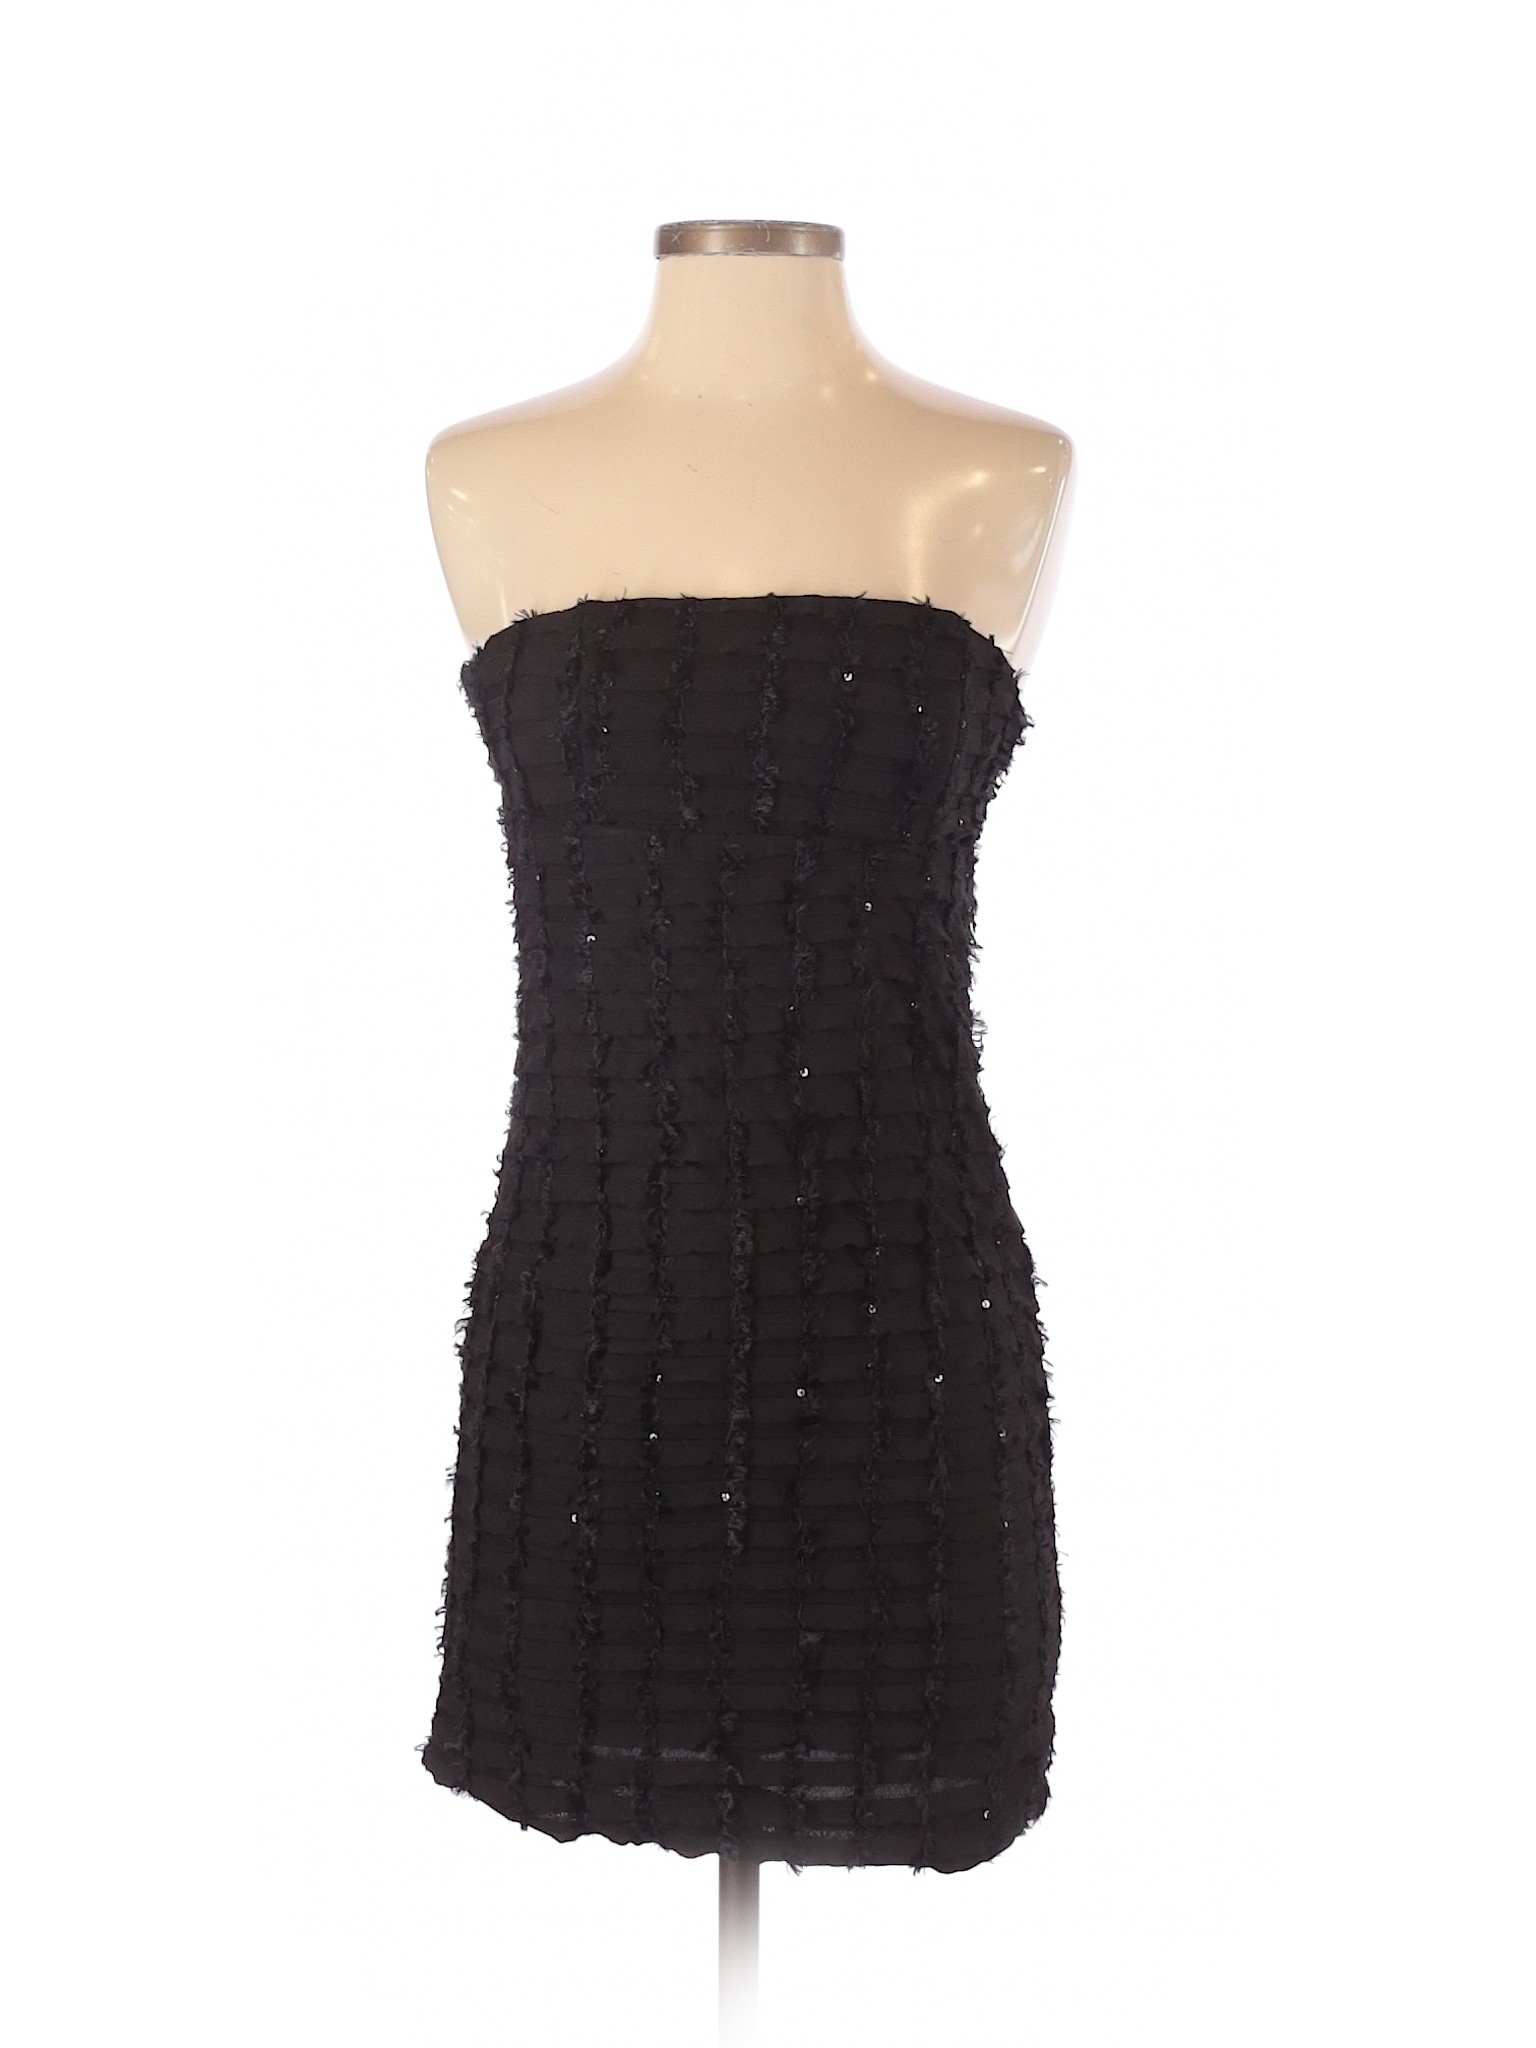 Poetry Clothing Women Black Cocktail Dress S | eBay